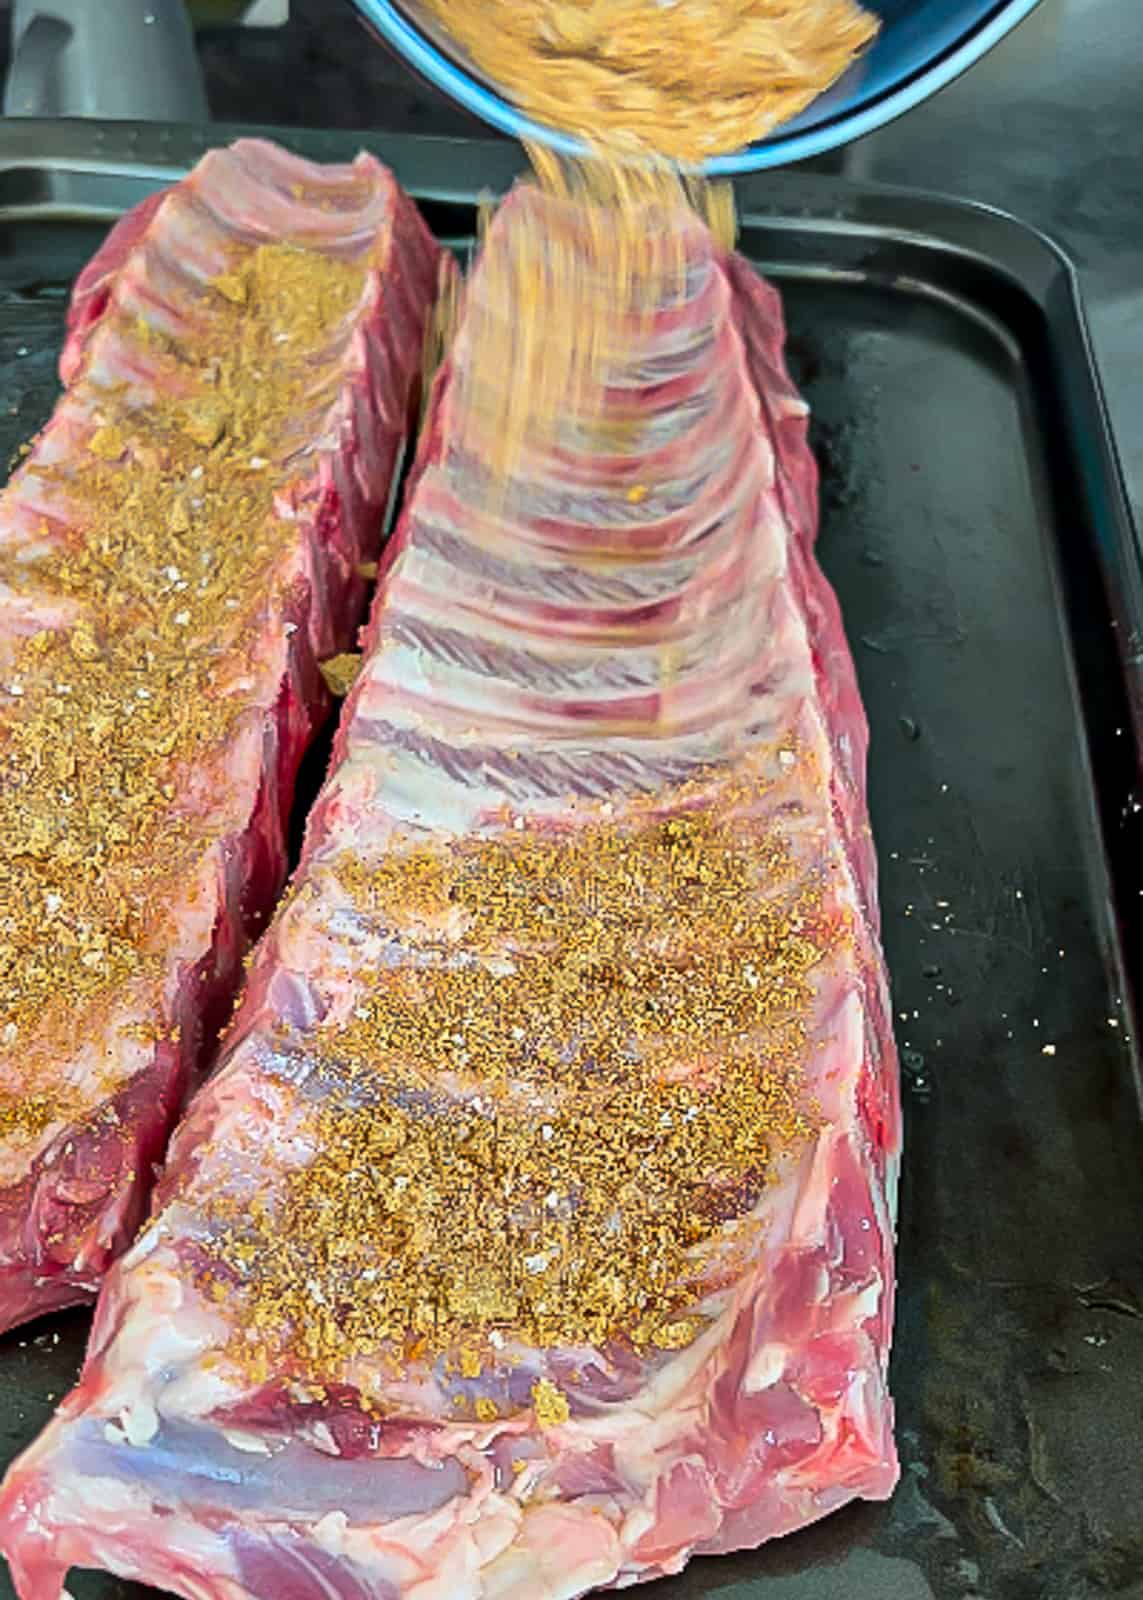 Adding pork rib rub to pork meat